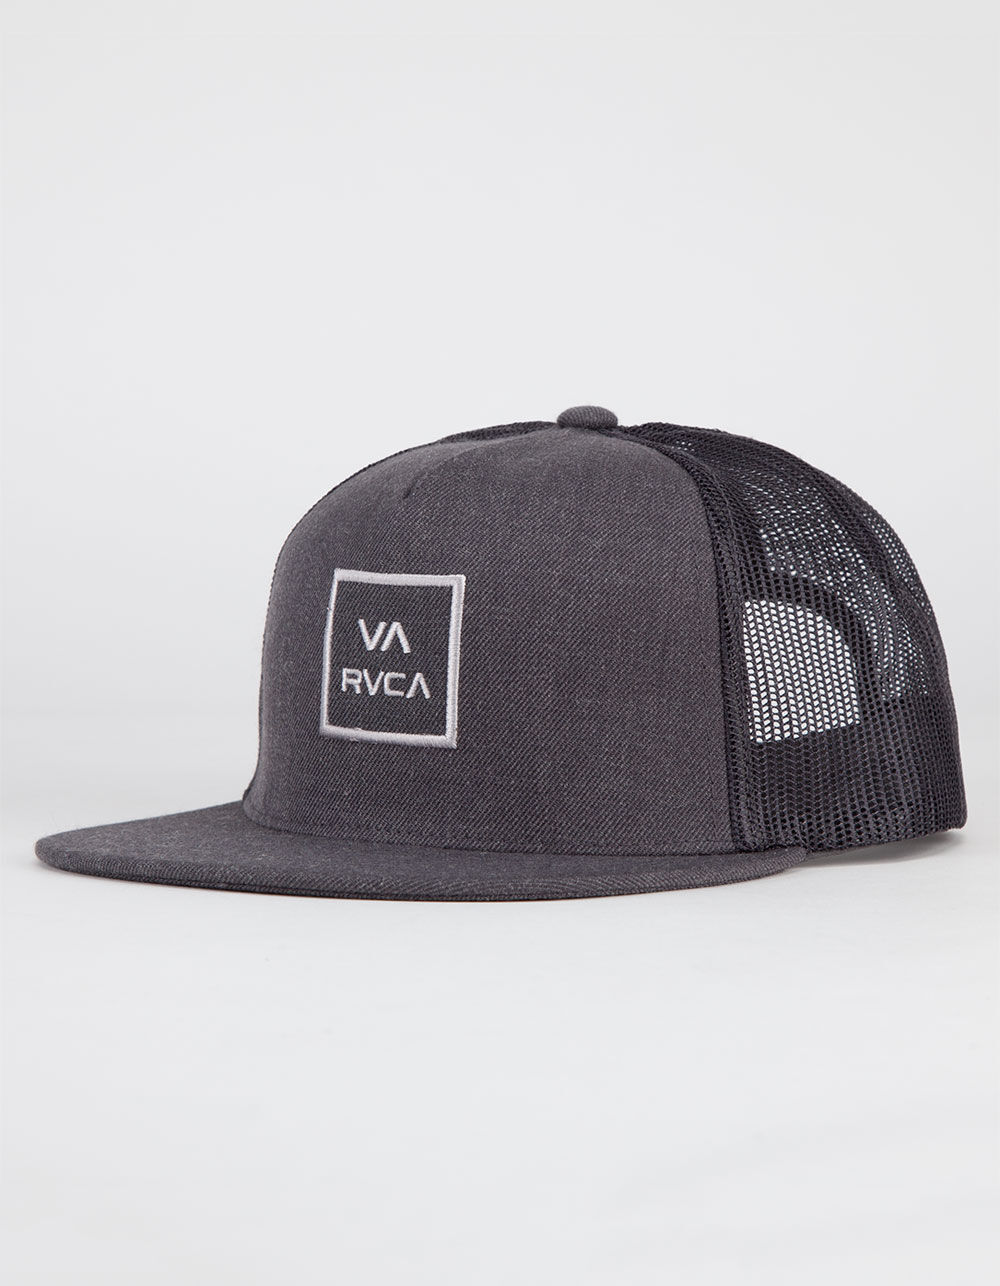 RVCA VA All The Way II Mens Trucker Hat